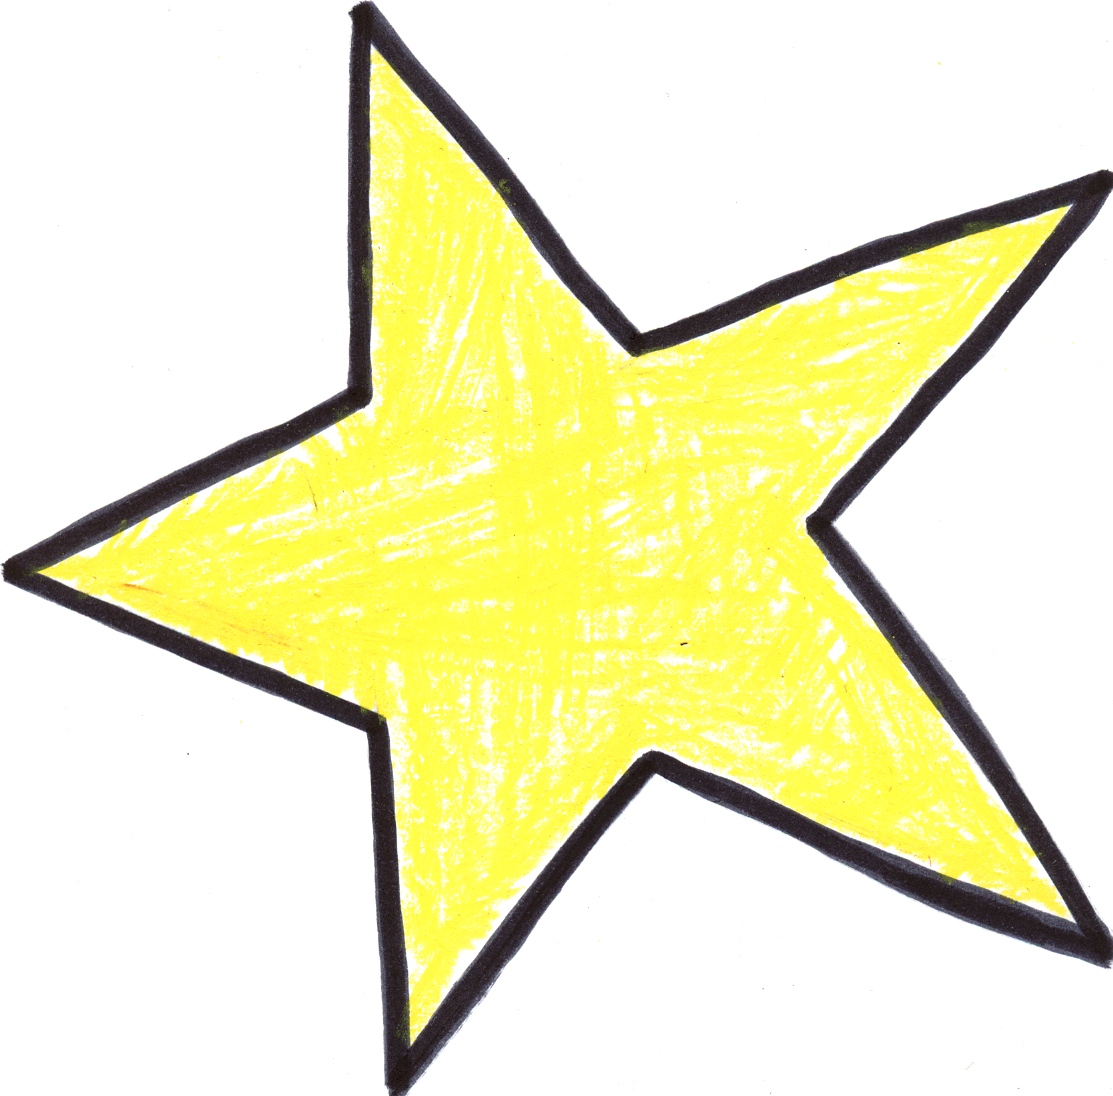 Hand drawn star clipart